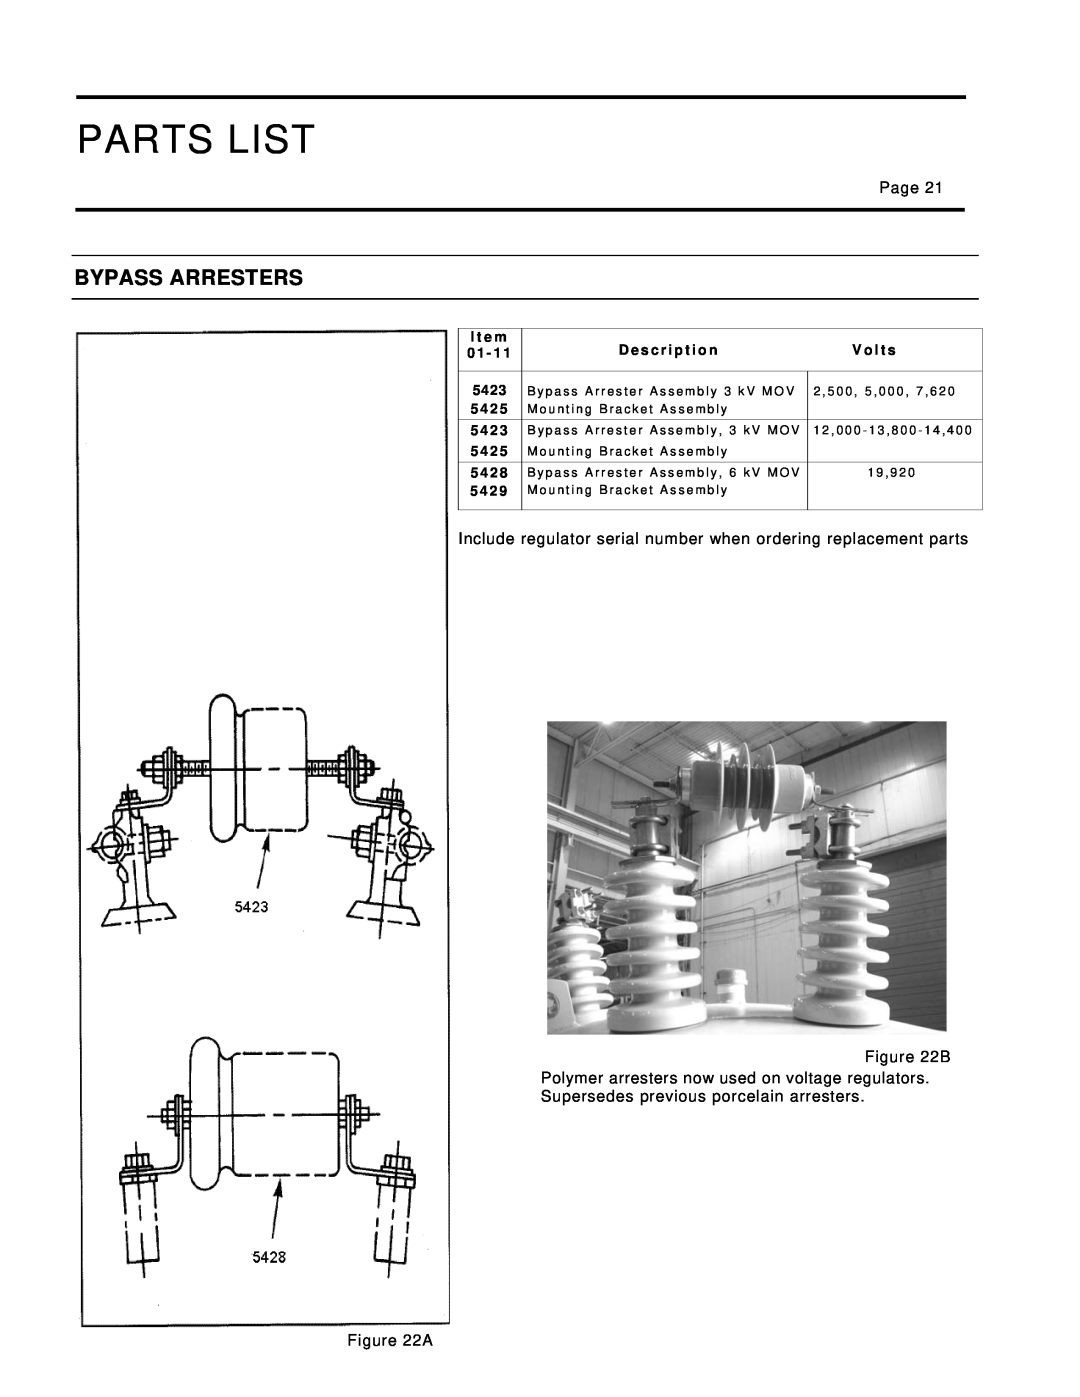 Siemens 21-115532-001 manual Bypass Arresters, Parts List, 5 42, D e s c r i p t i o n 